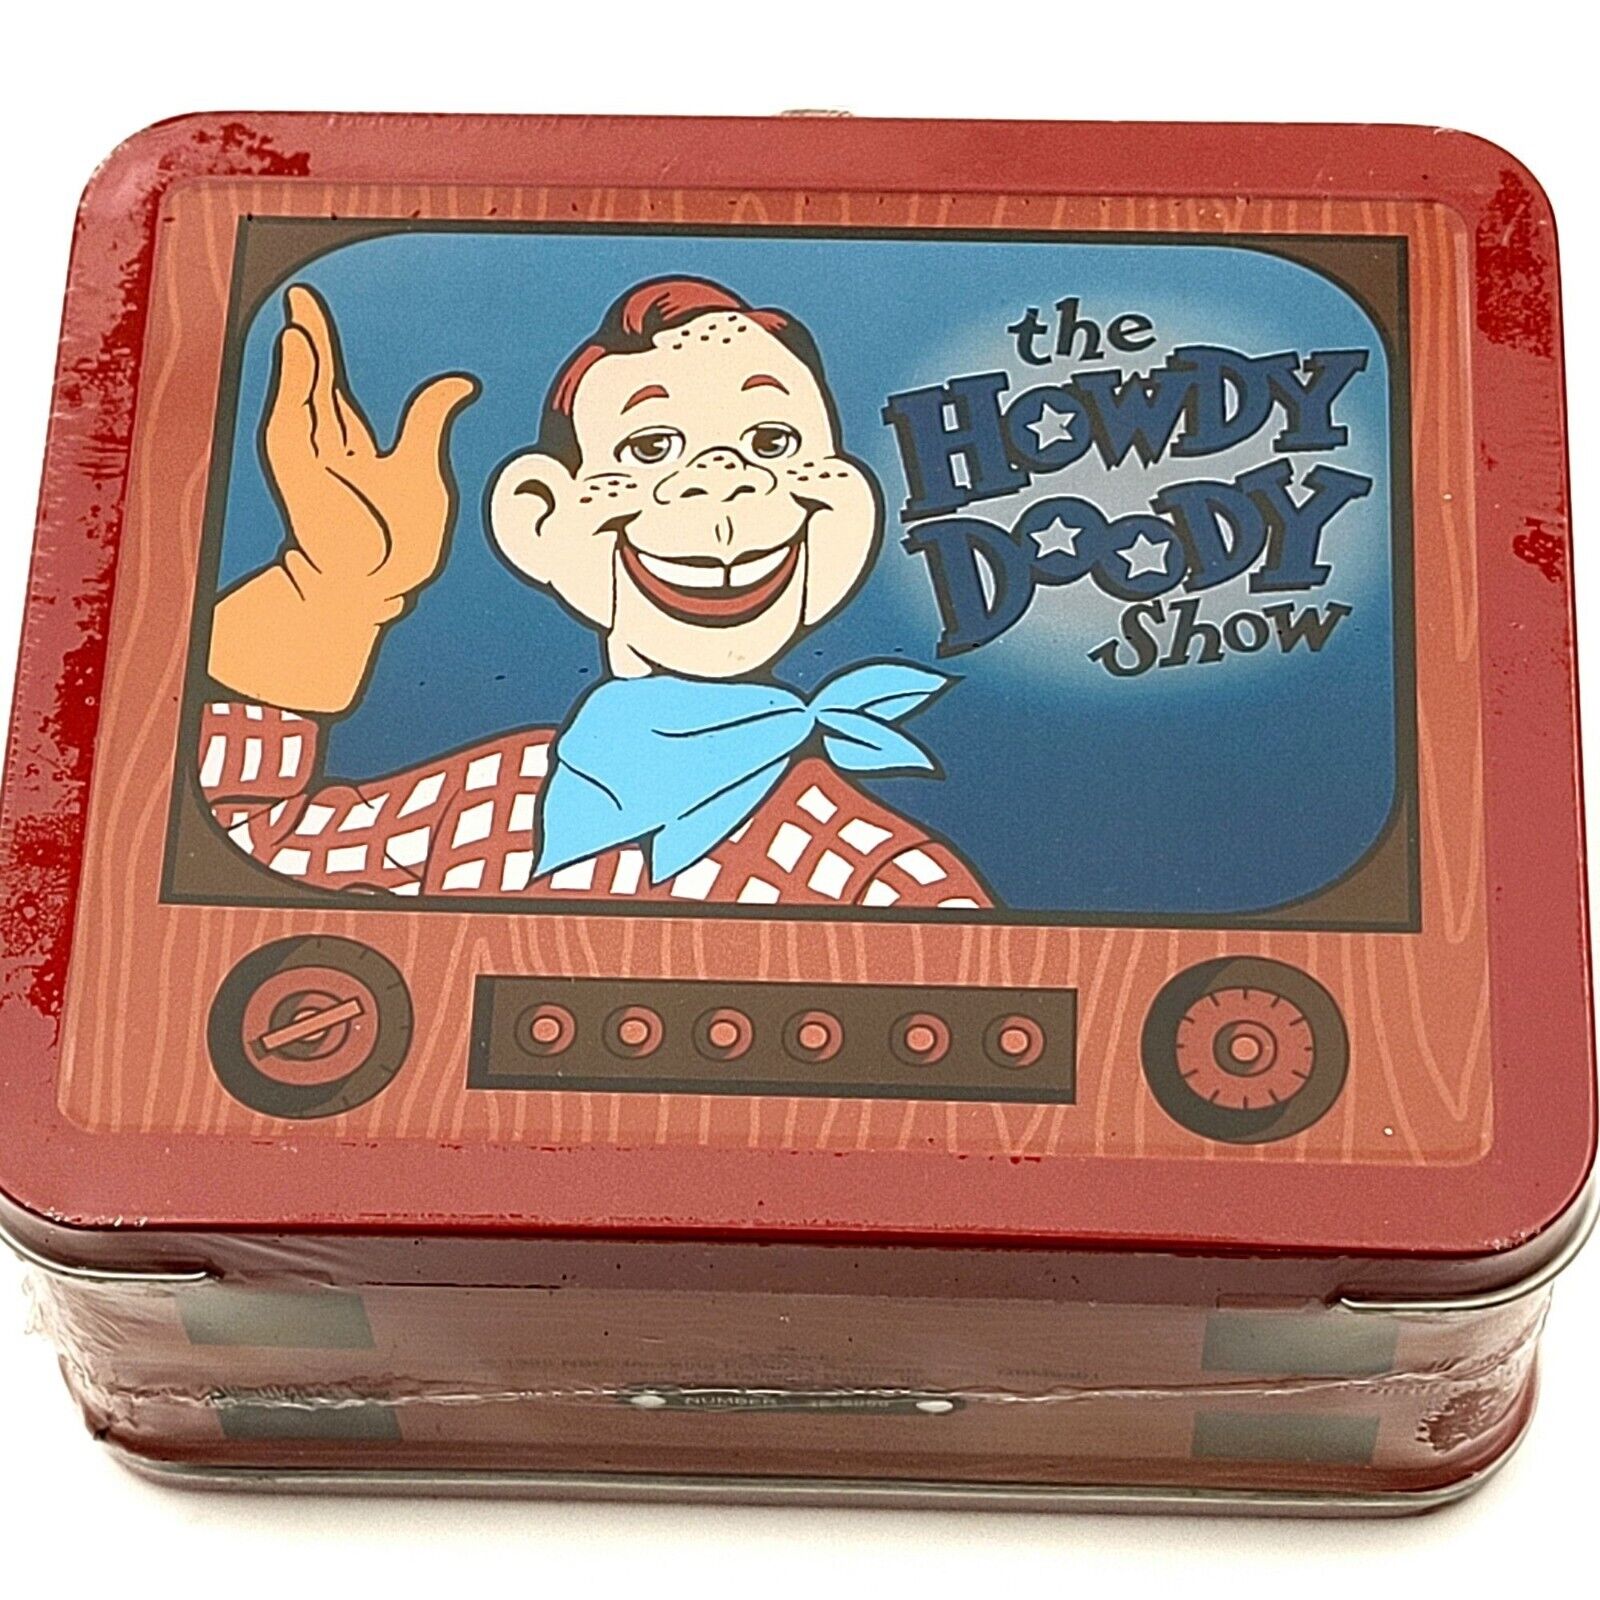 Hallmark The Howdy Doody Show Collectible Mini Lunch Box Tin